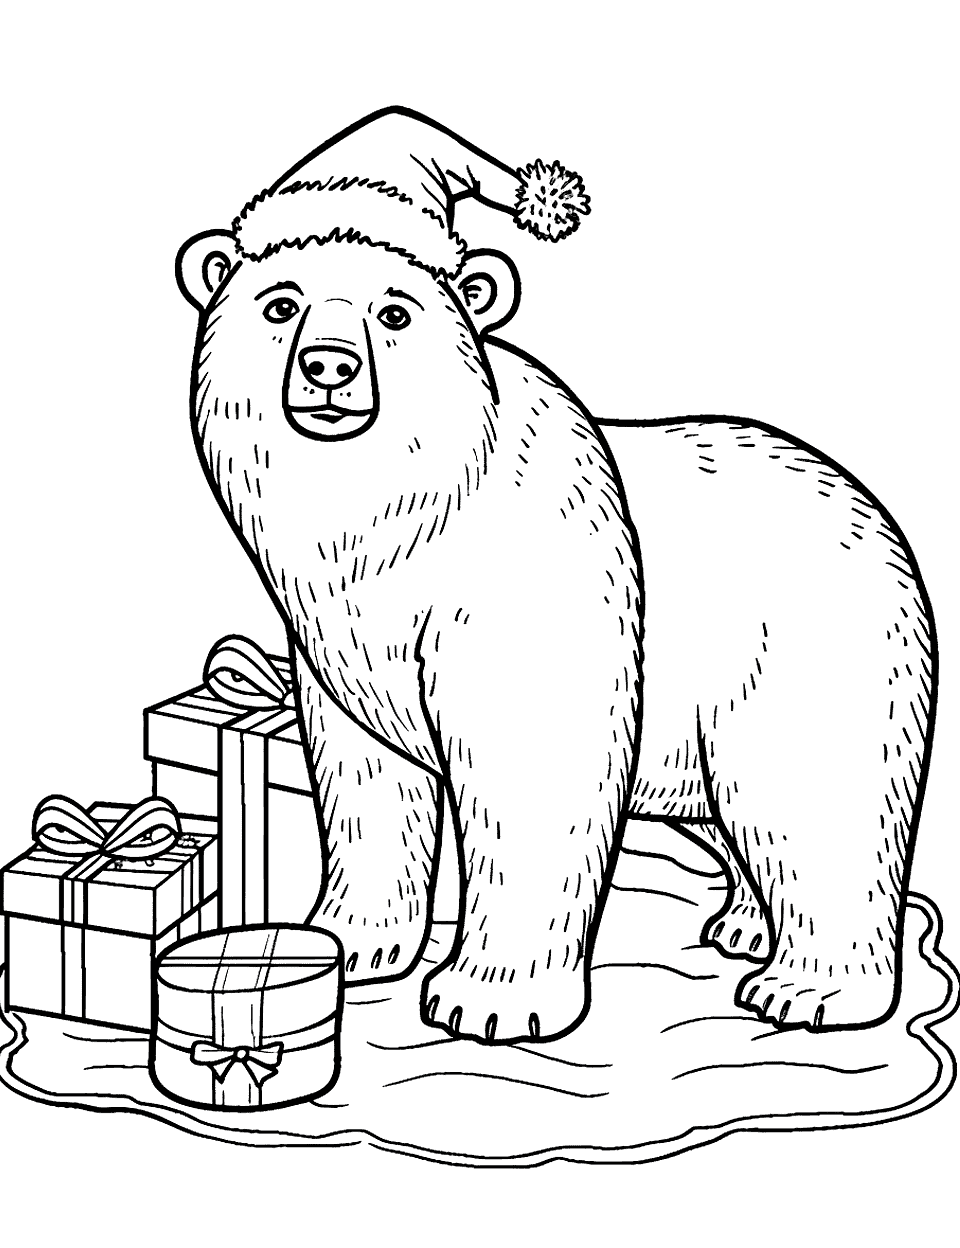 Christmas Polar Bear Coloring Page - A polar bear wearing a Santa hat, standing near a pile of presents.